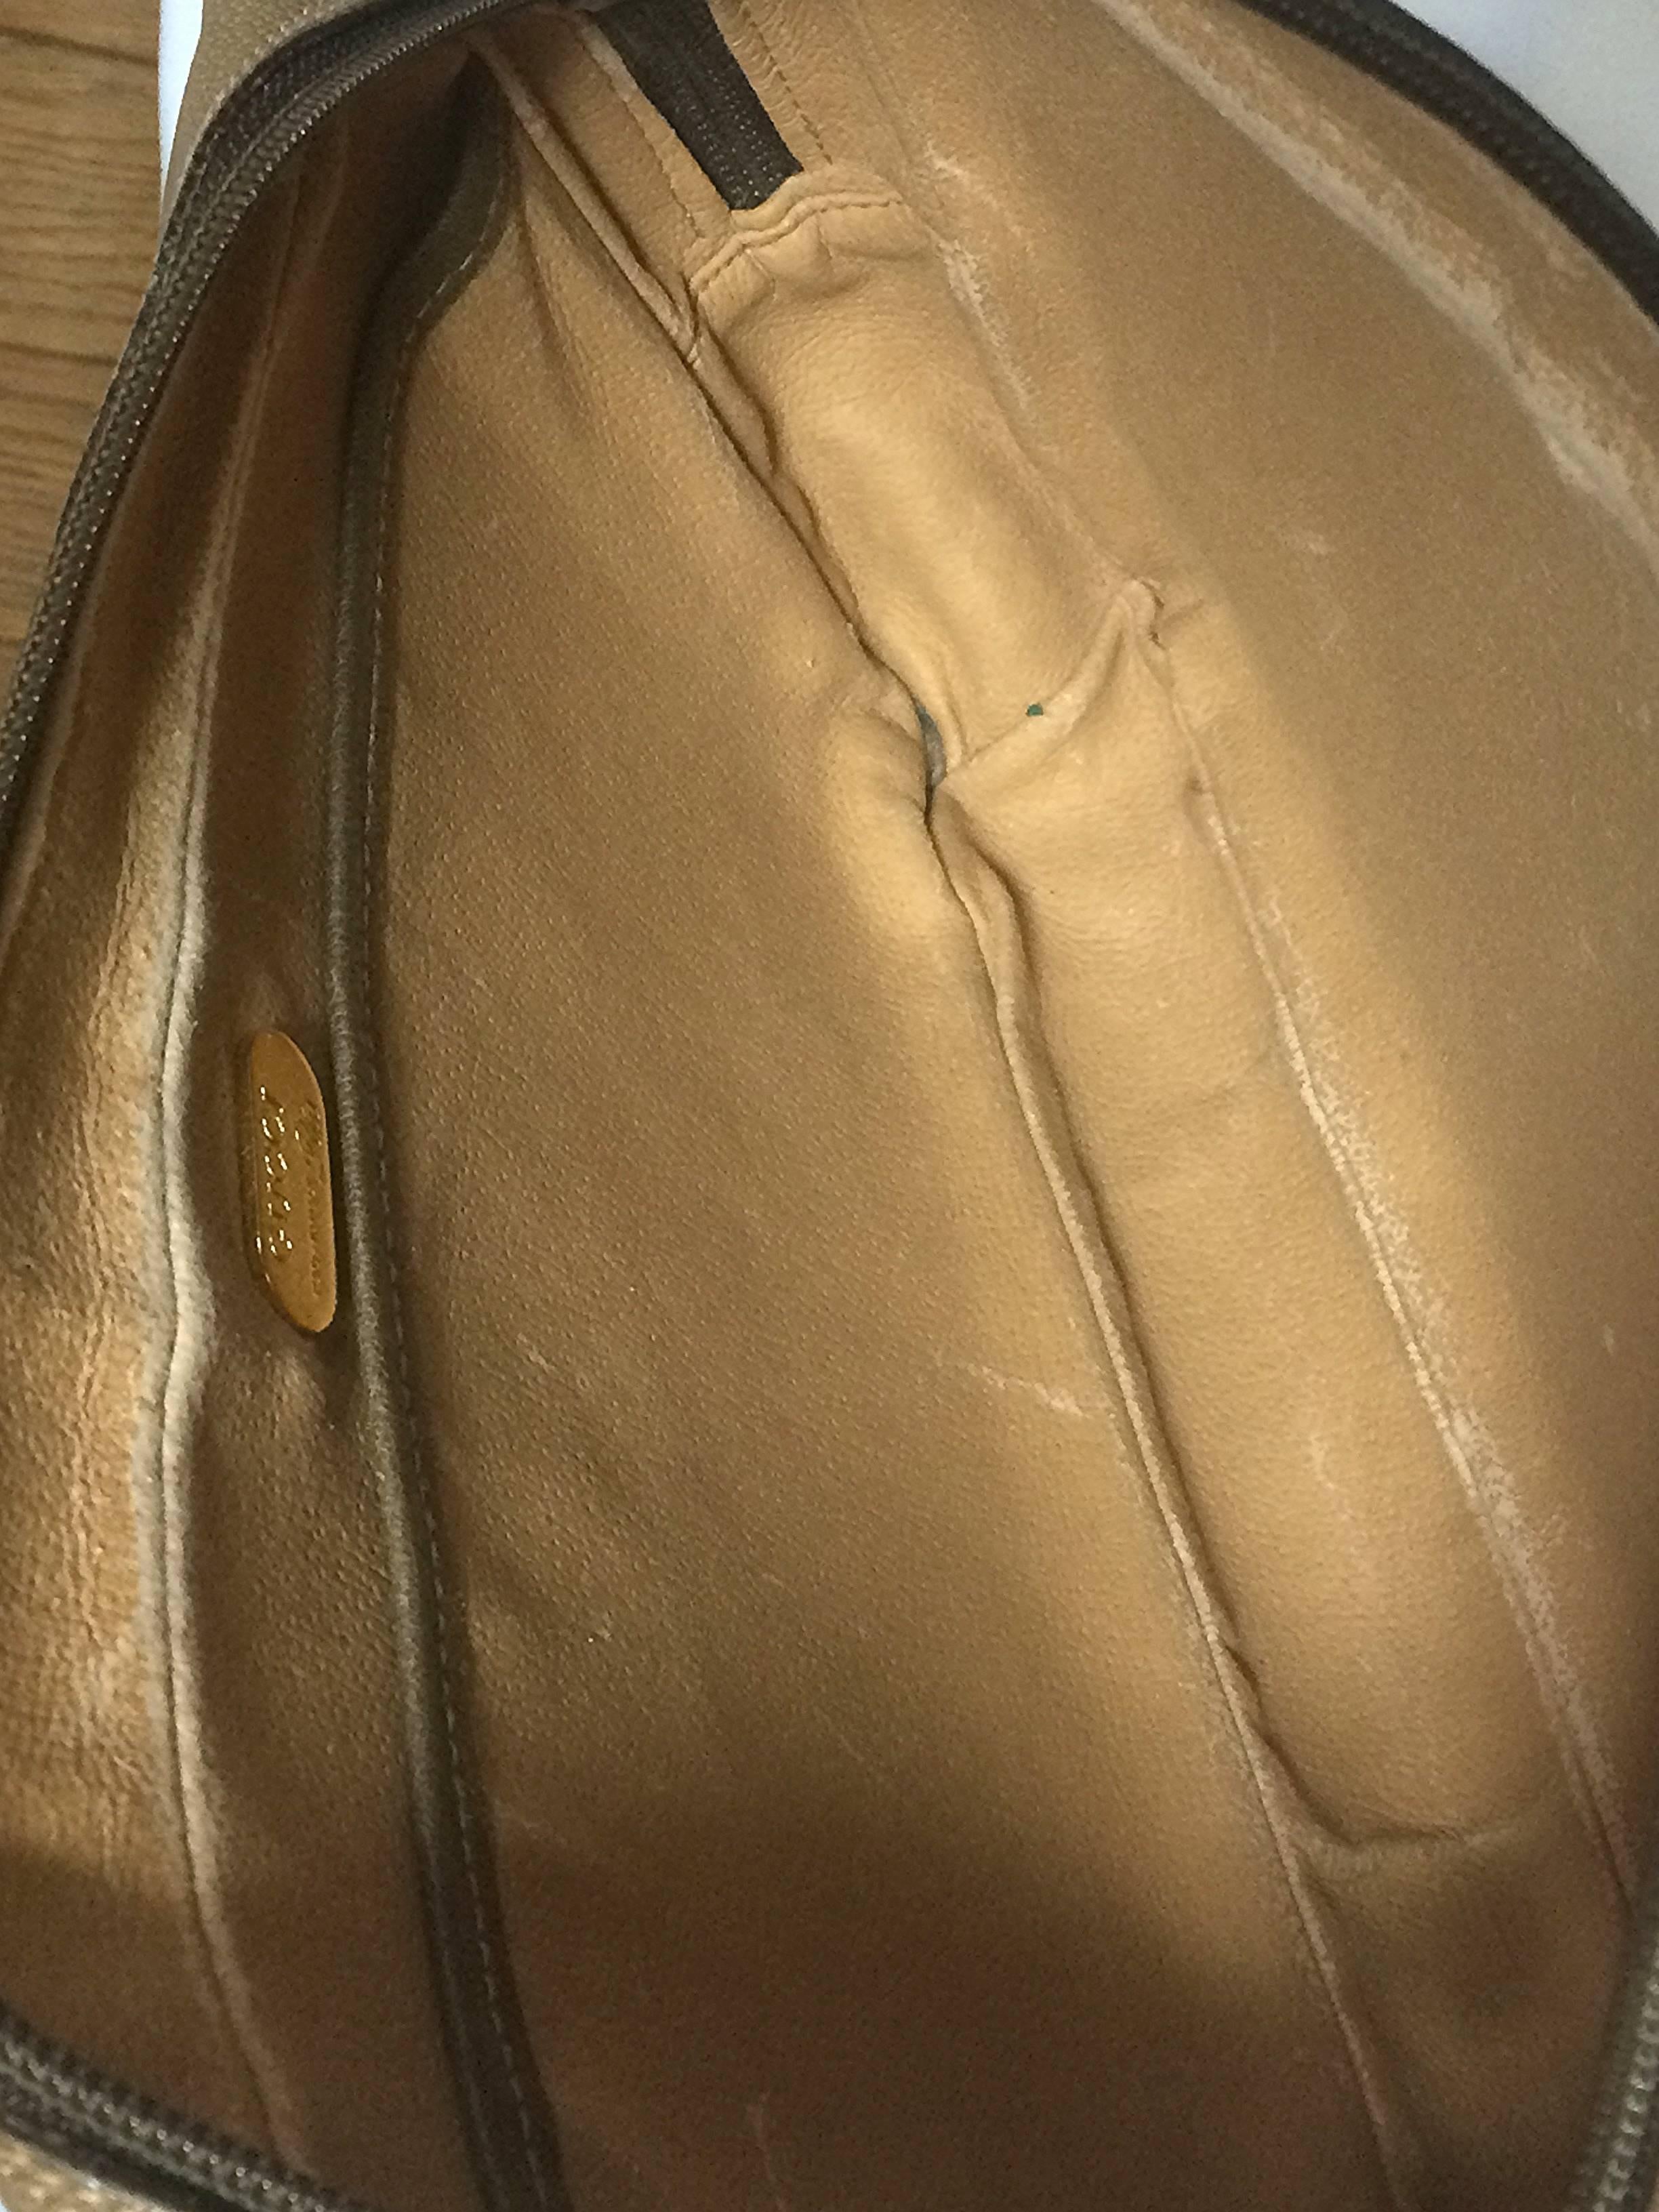 Women's or Men's 80's vintage Gucci Plus beige monogram clutch bag, cosmetic, toiletry pouch.